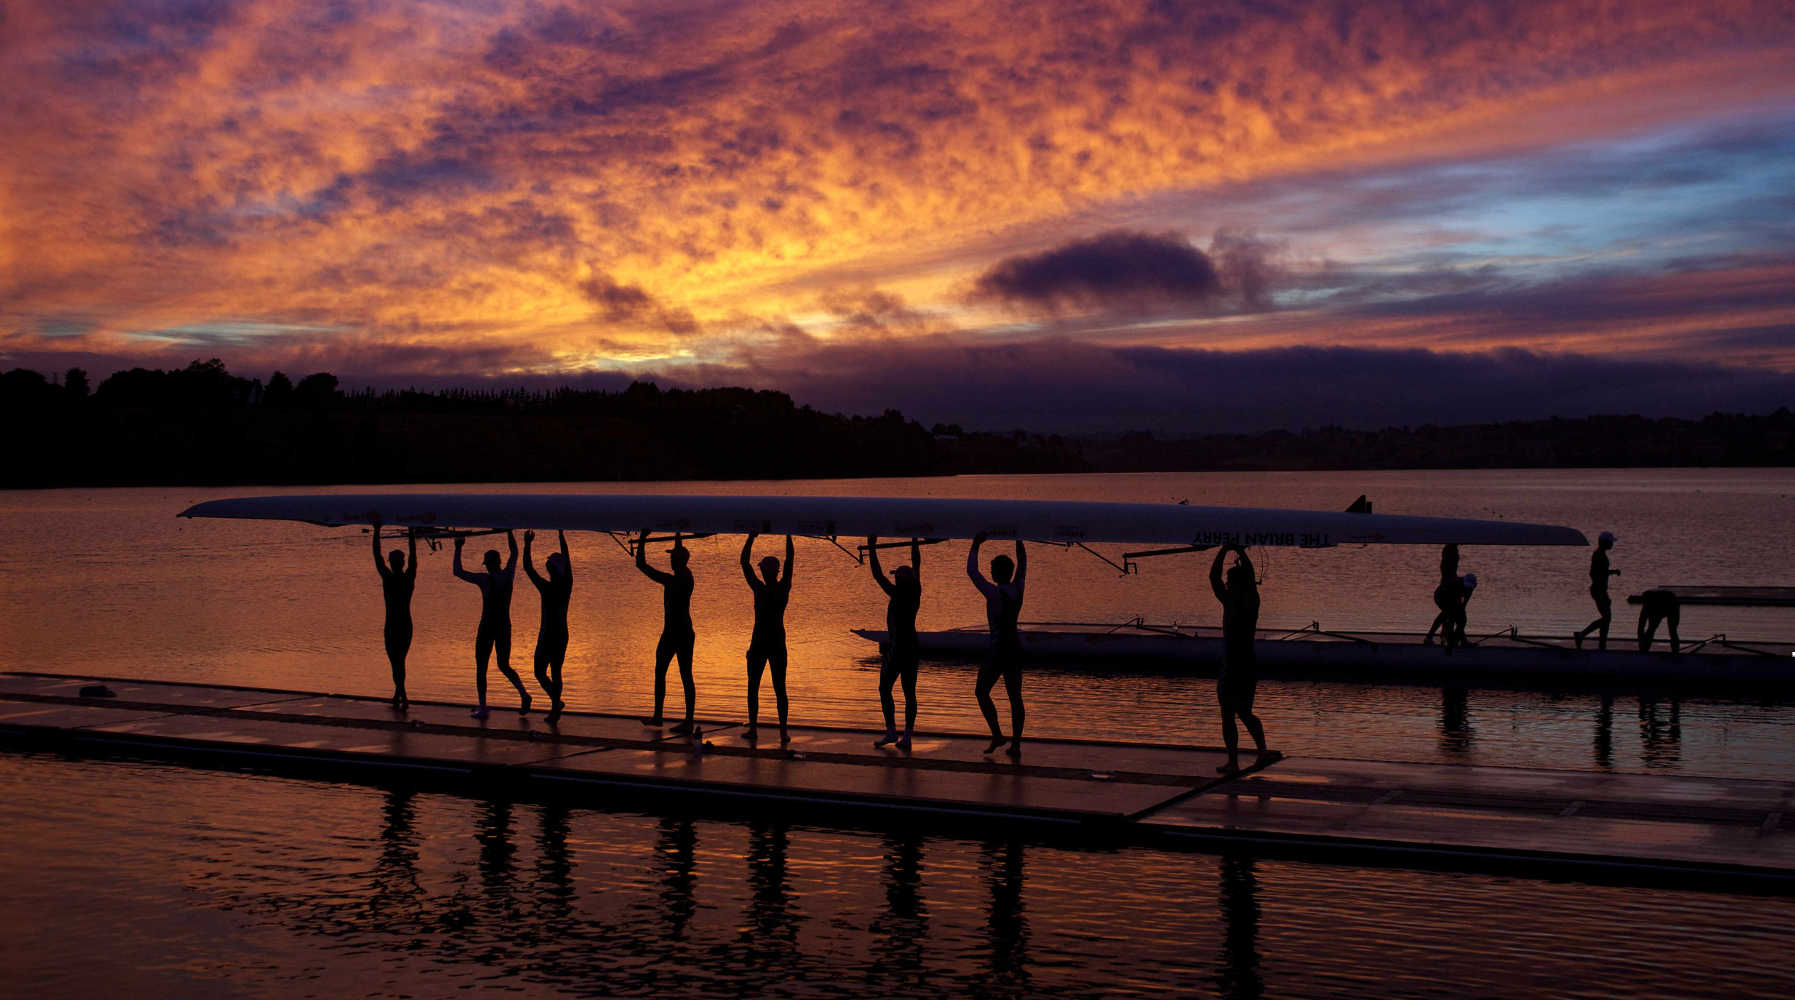 Eight person crew of rowers Lake Karapiro, Mighty River Domain, Waikato, New Zealand